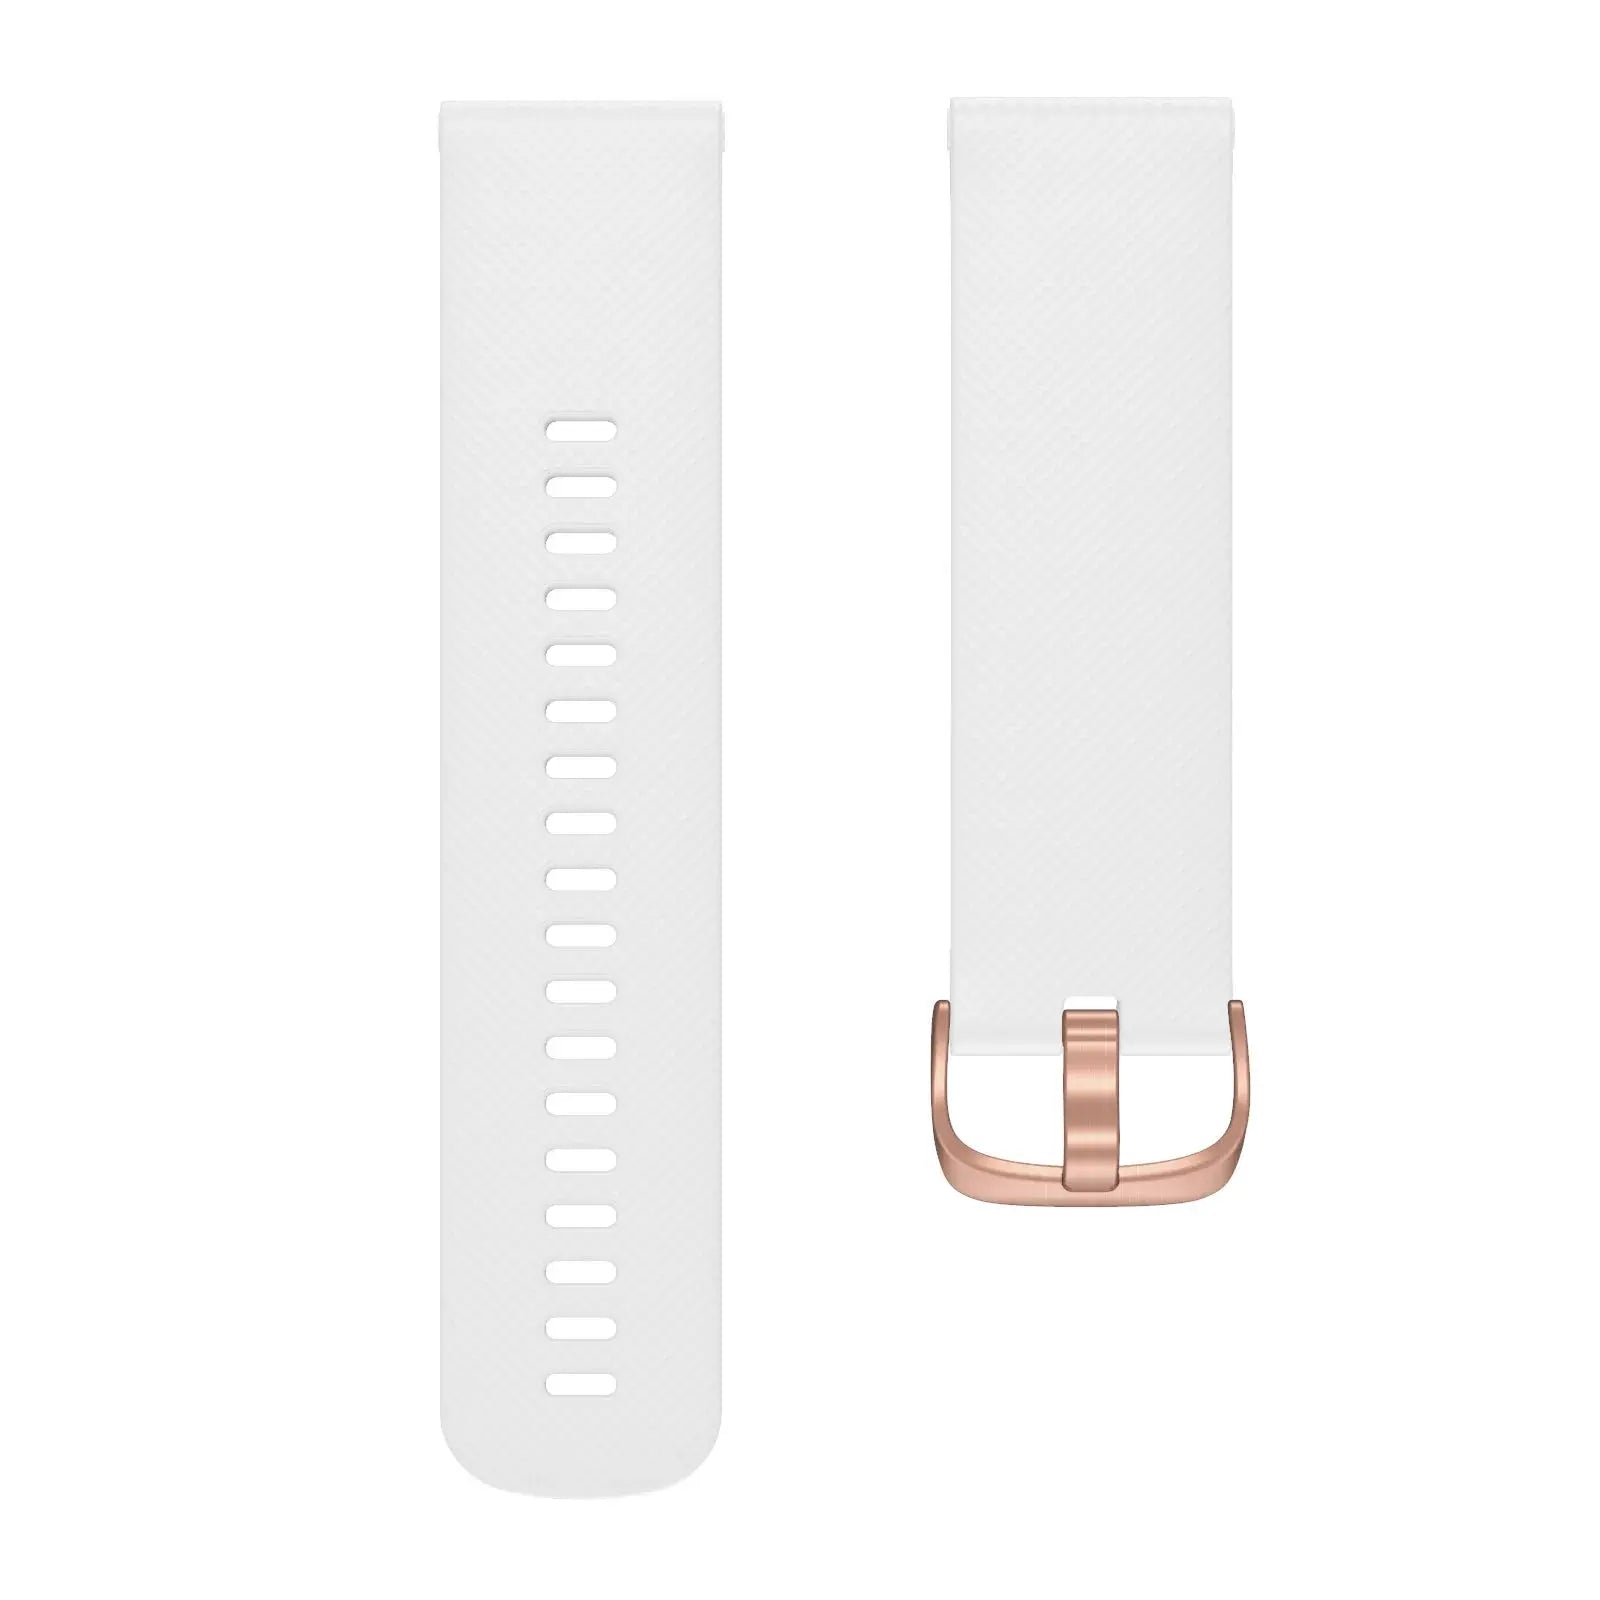 For Garmin Venu 3S/Venu 2S/Vivoactive 4S/Vivomove 3S/Forerunner 255S 265S Wristband Strap Bracelet Belt Silicone Watch Band 18mm Pinnacle Luxuries